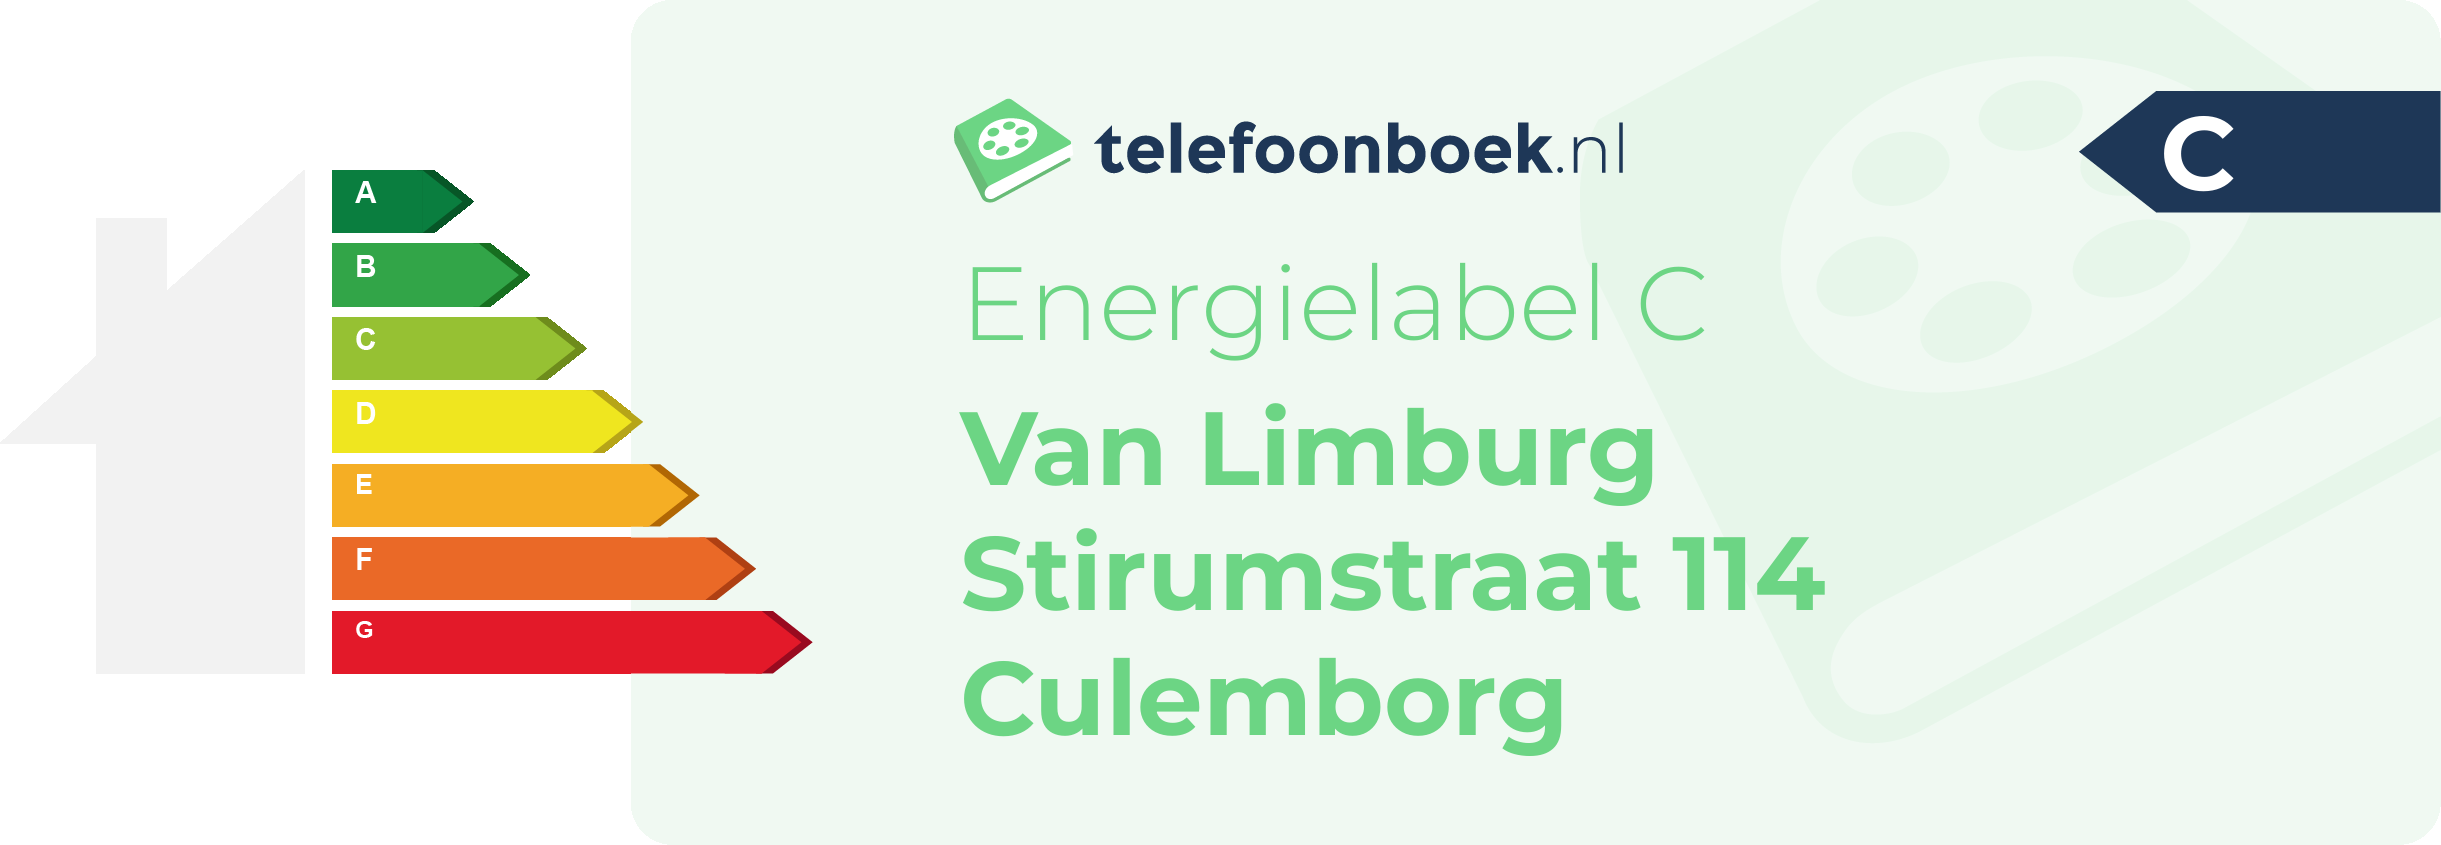 Energielabel Van Limburg Stirumstraat 114 Culemborg